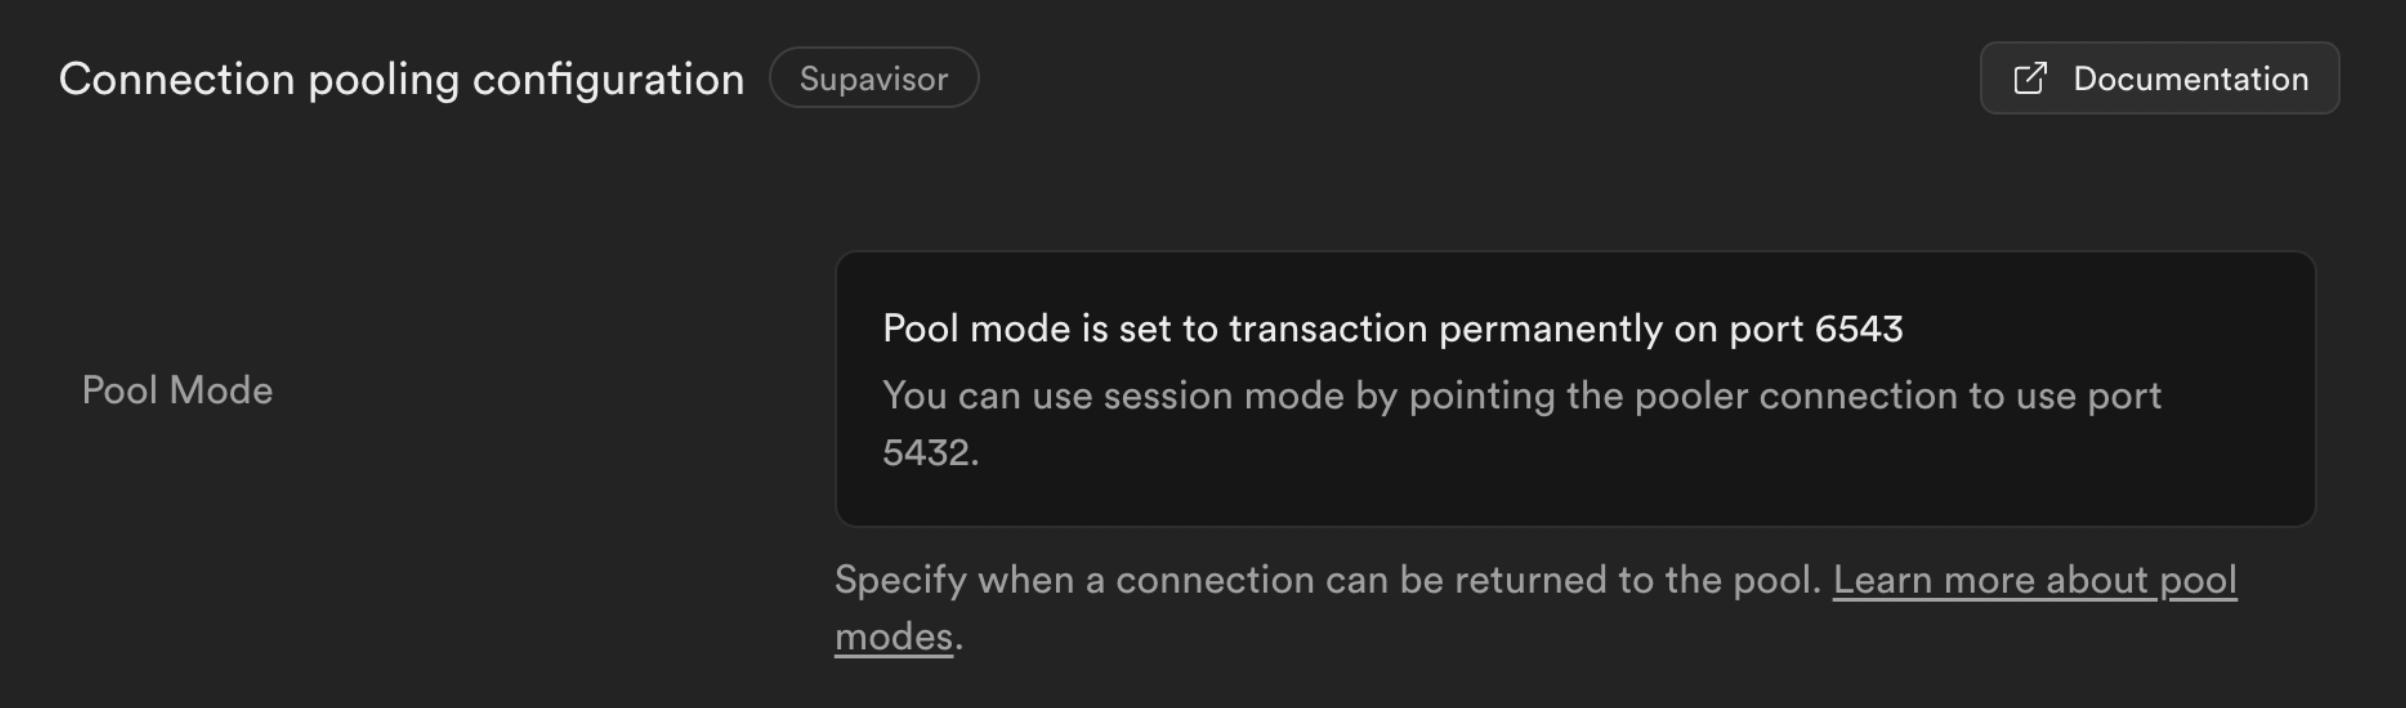 Supavisor pooler port 6543 is transaction-mode only